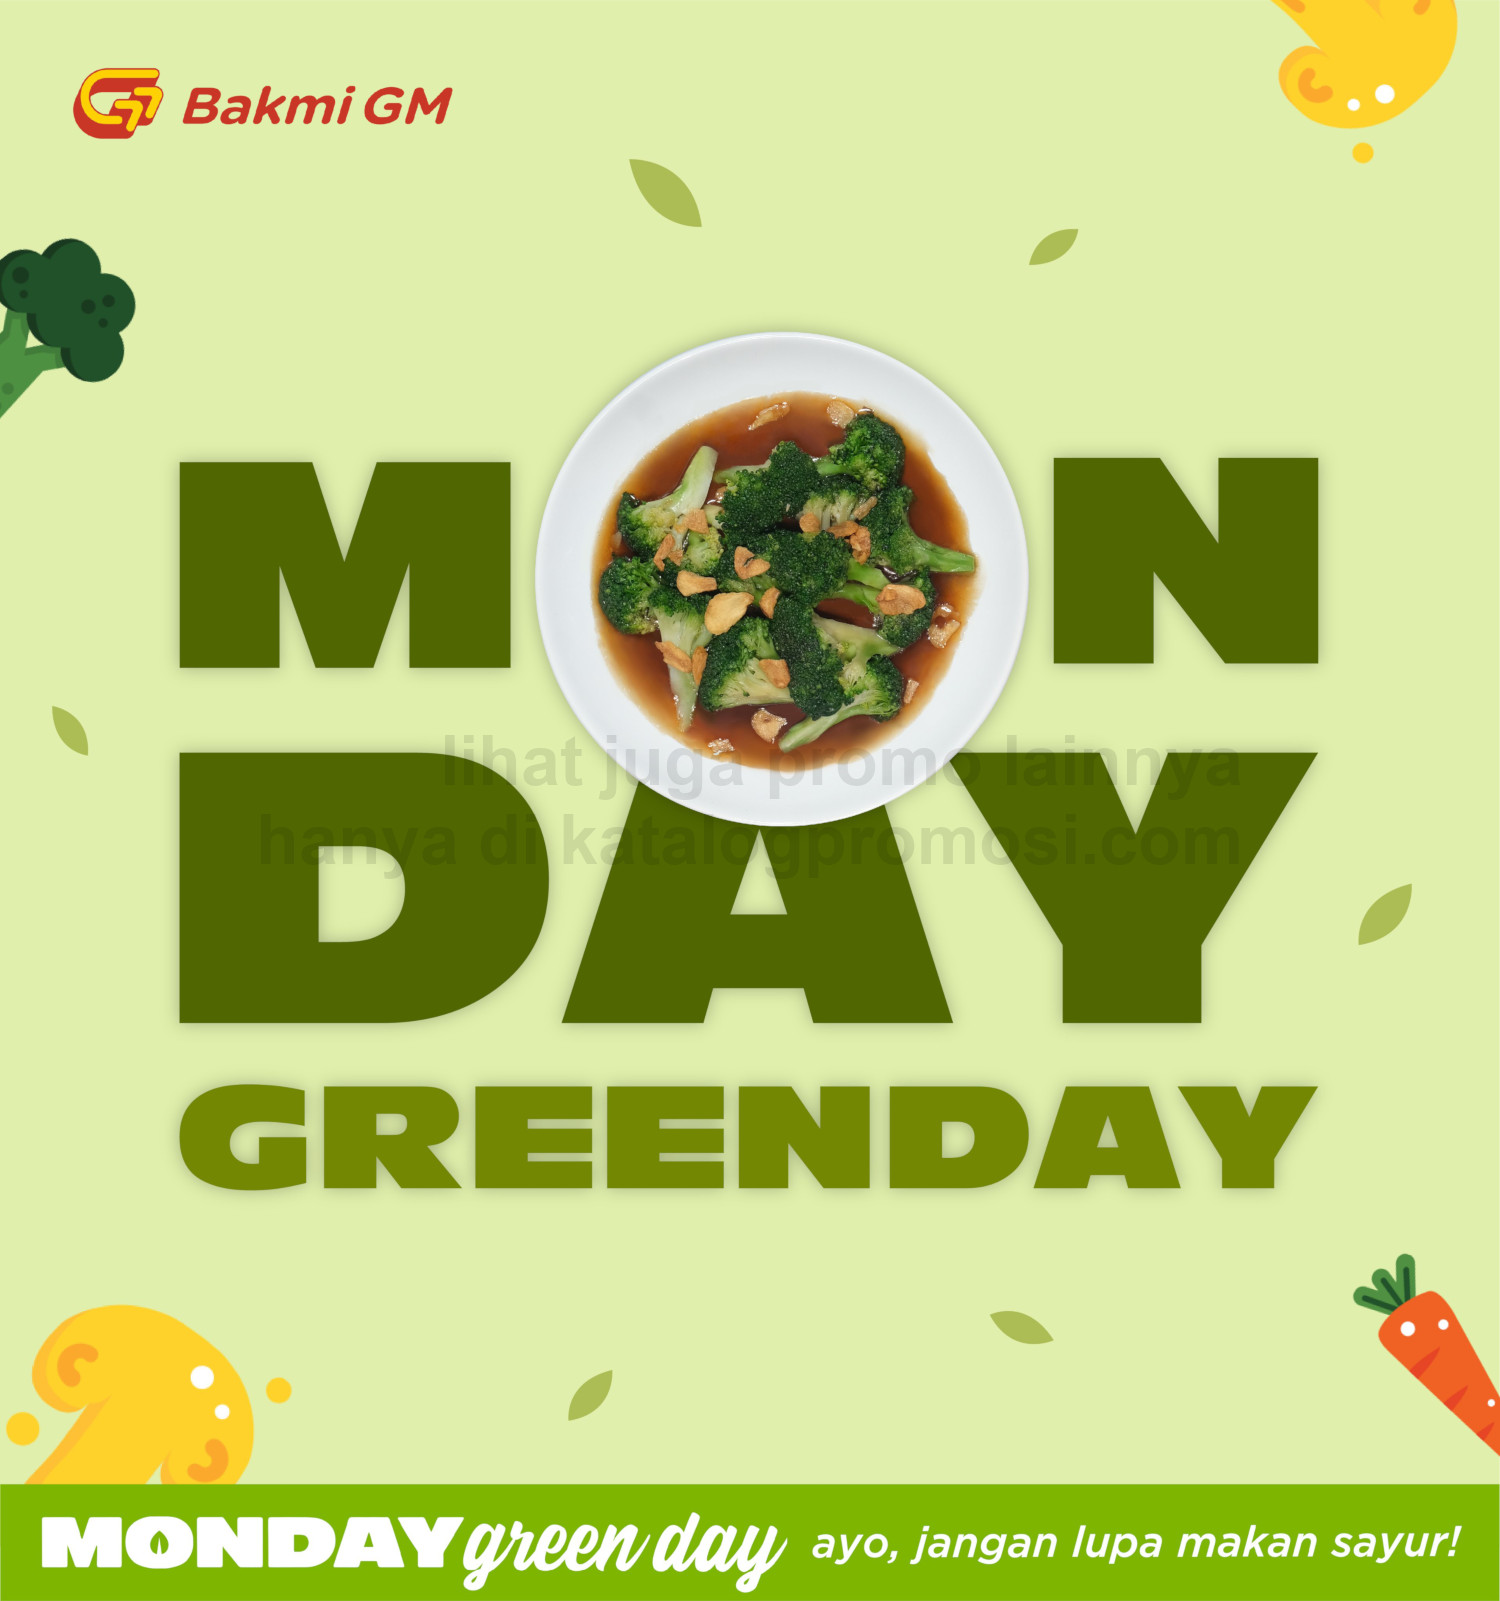 Bakmi GM Monday Green Day! Harga Spesial untuk Menu Pilihan